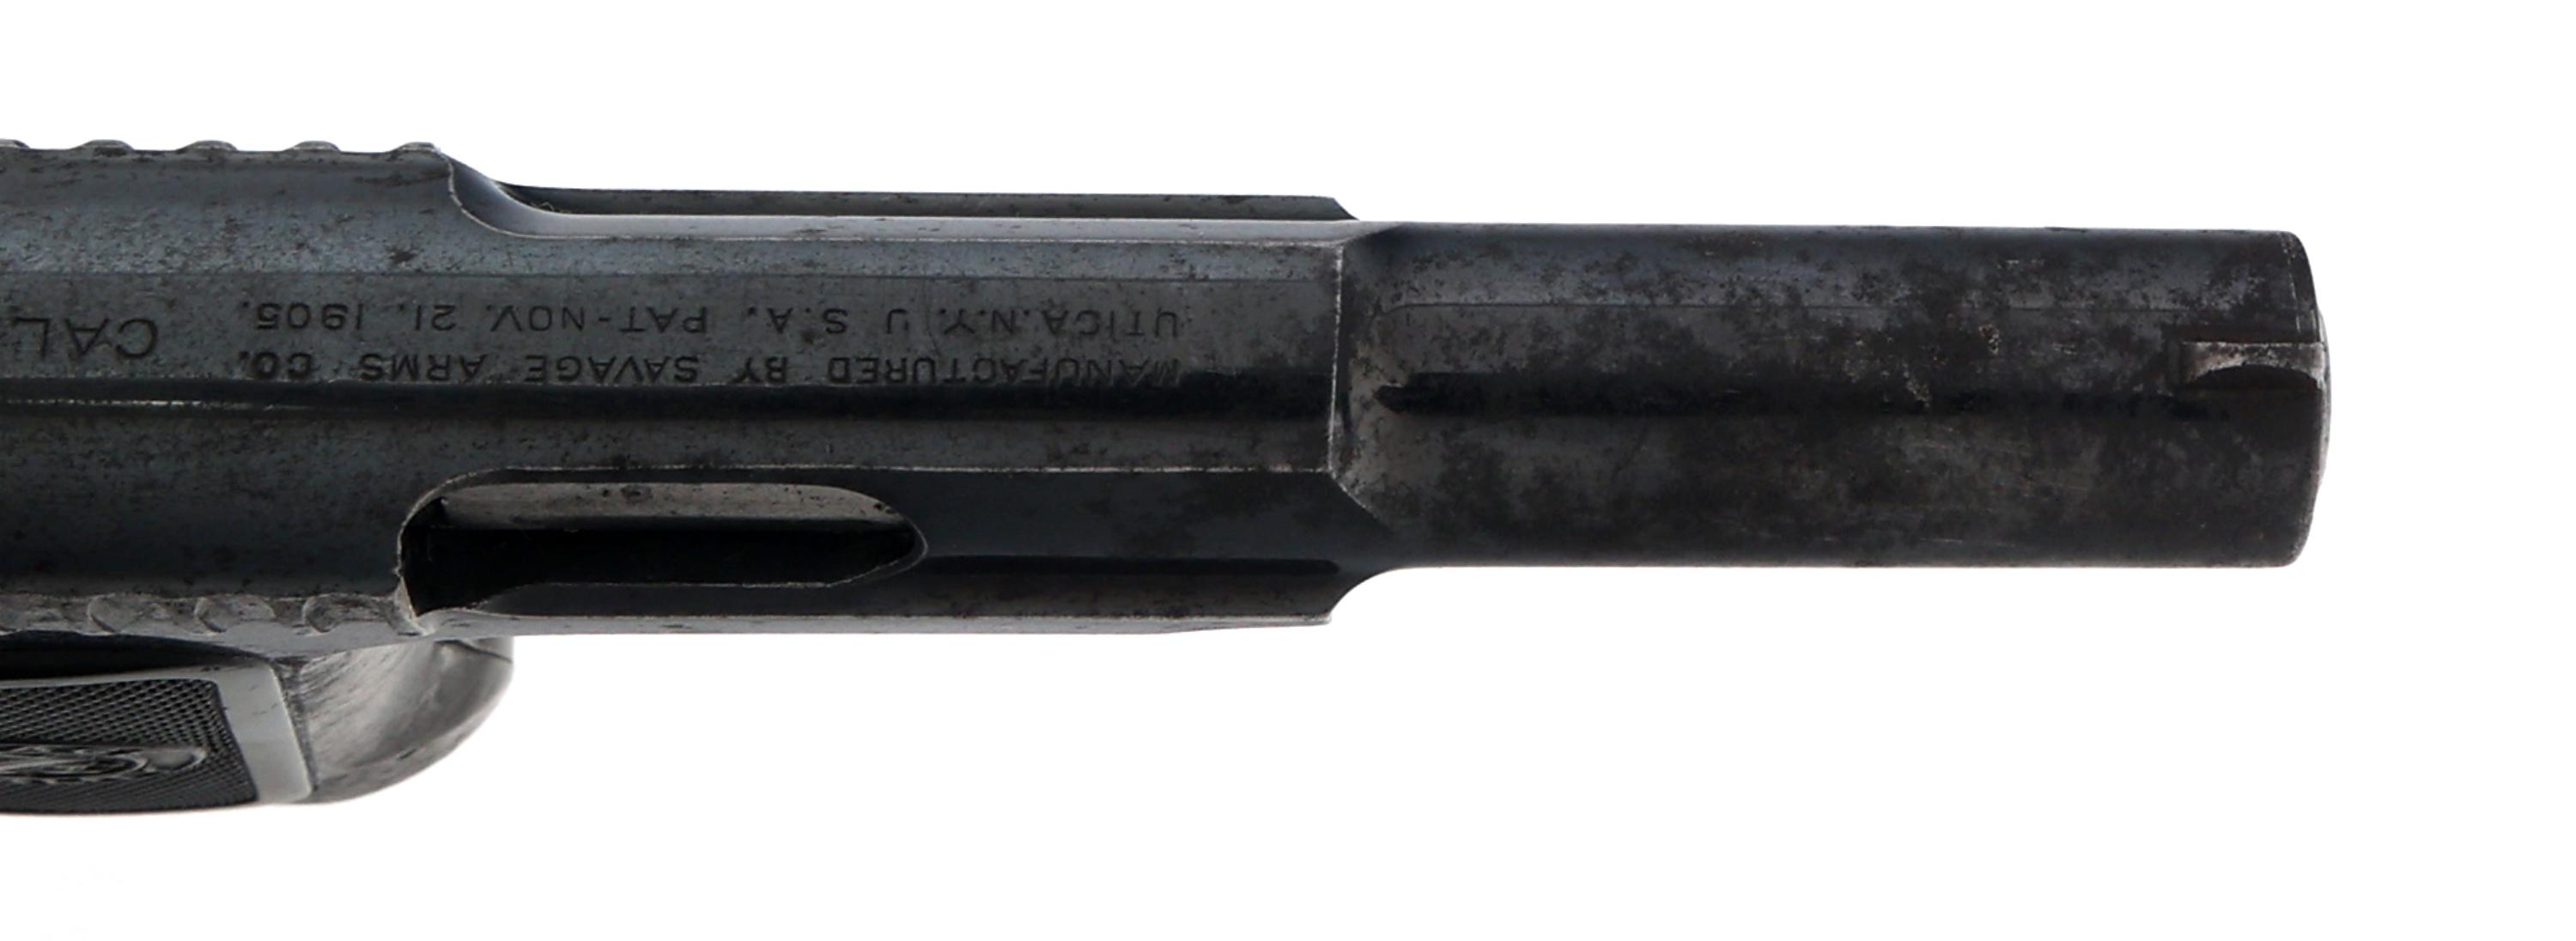 SAVAGE ARMS MODEL 1907 .32 ACP POCKET PISTOL